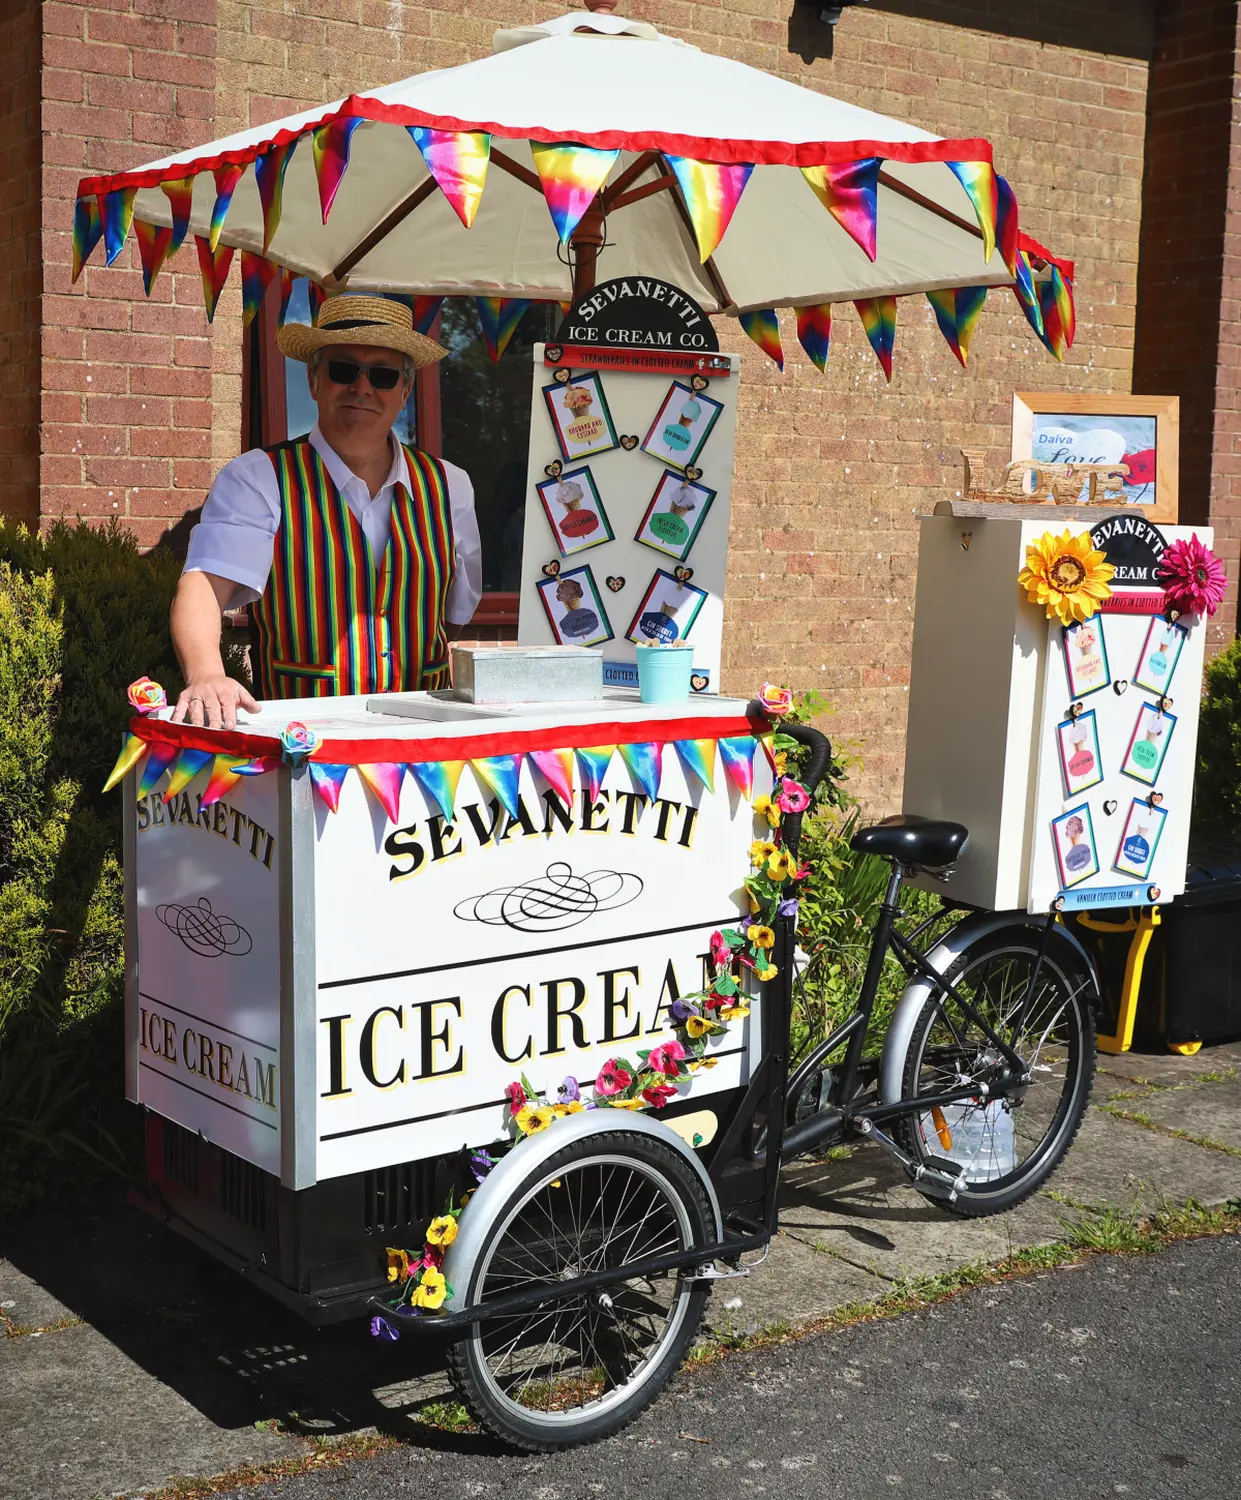 Sevanetti Ice Cream Bikes colorful decoration set